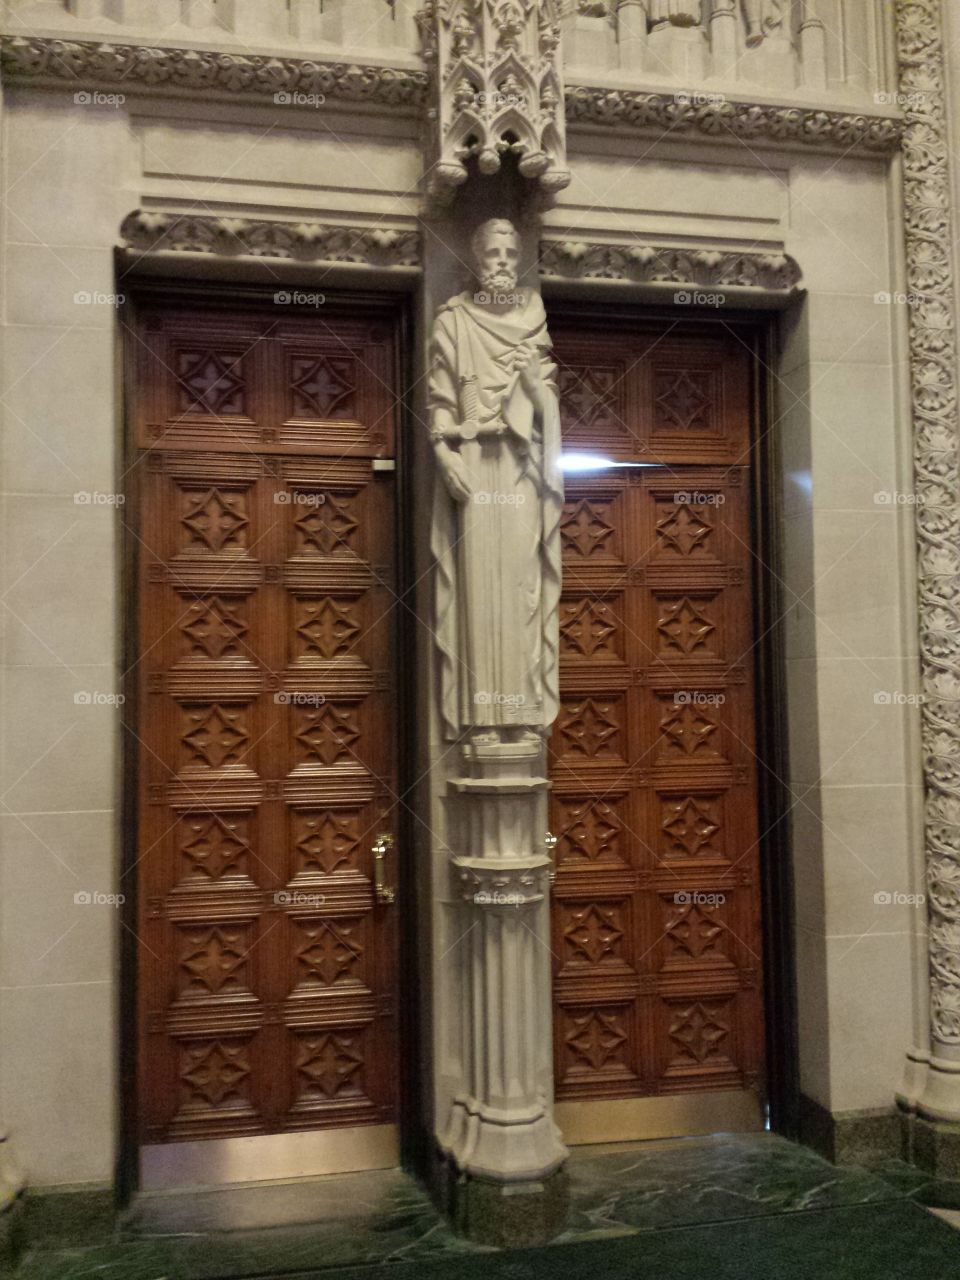 Basilica Interior Doors